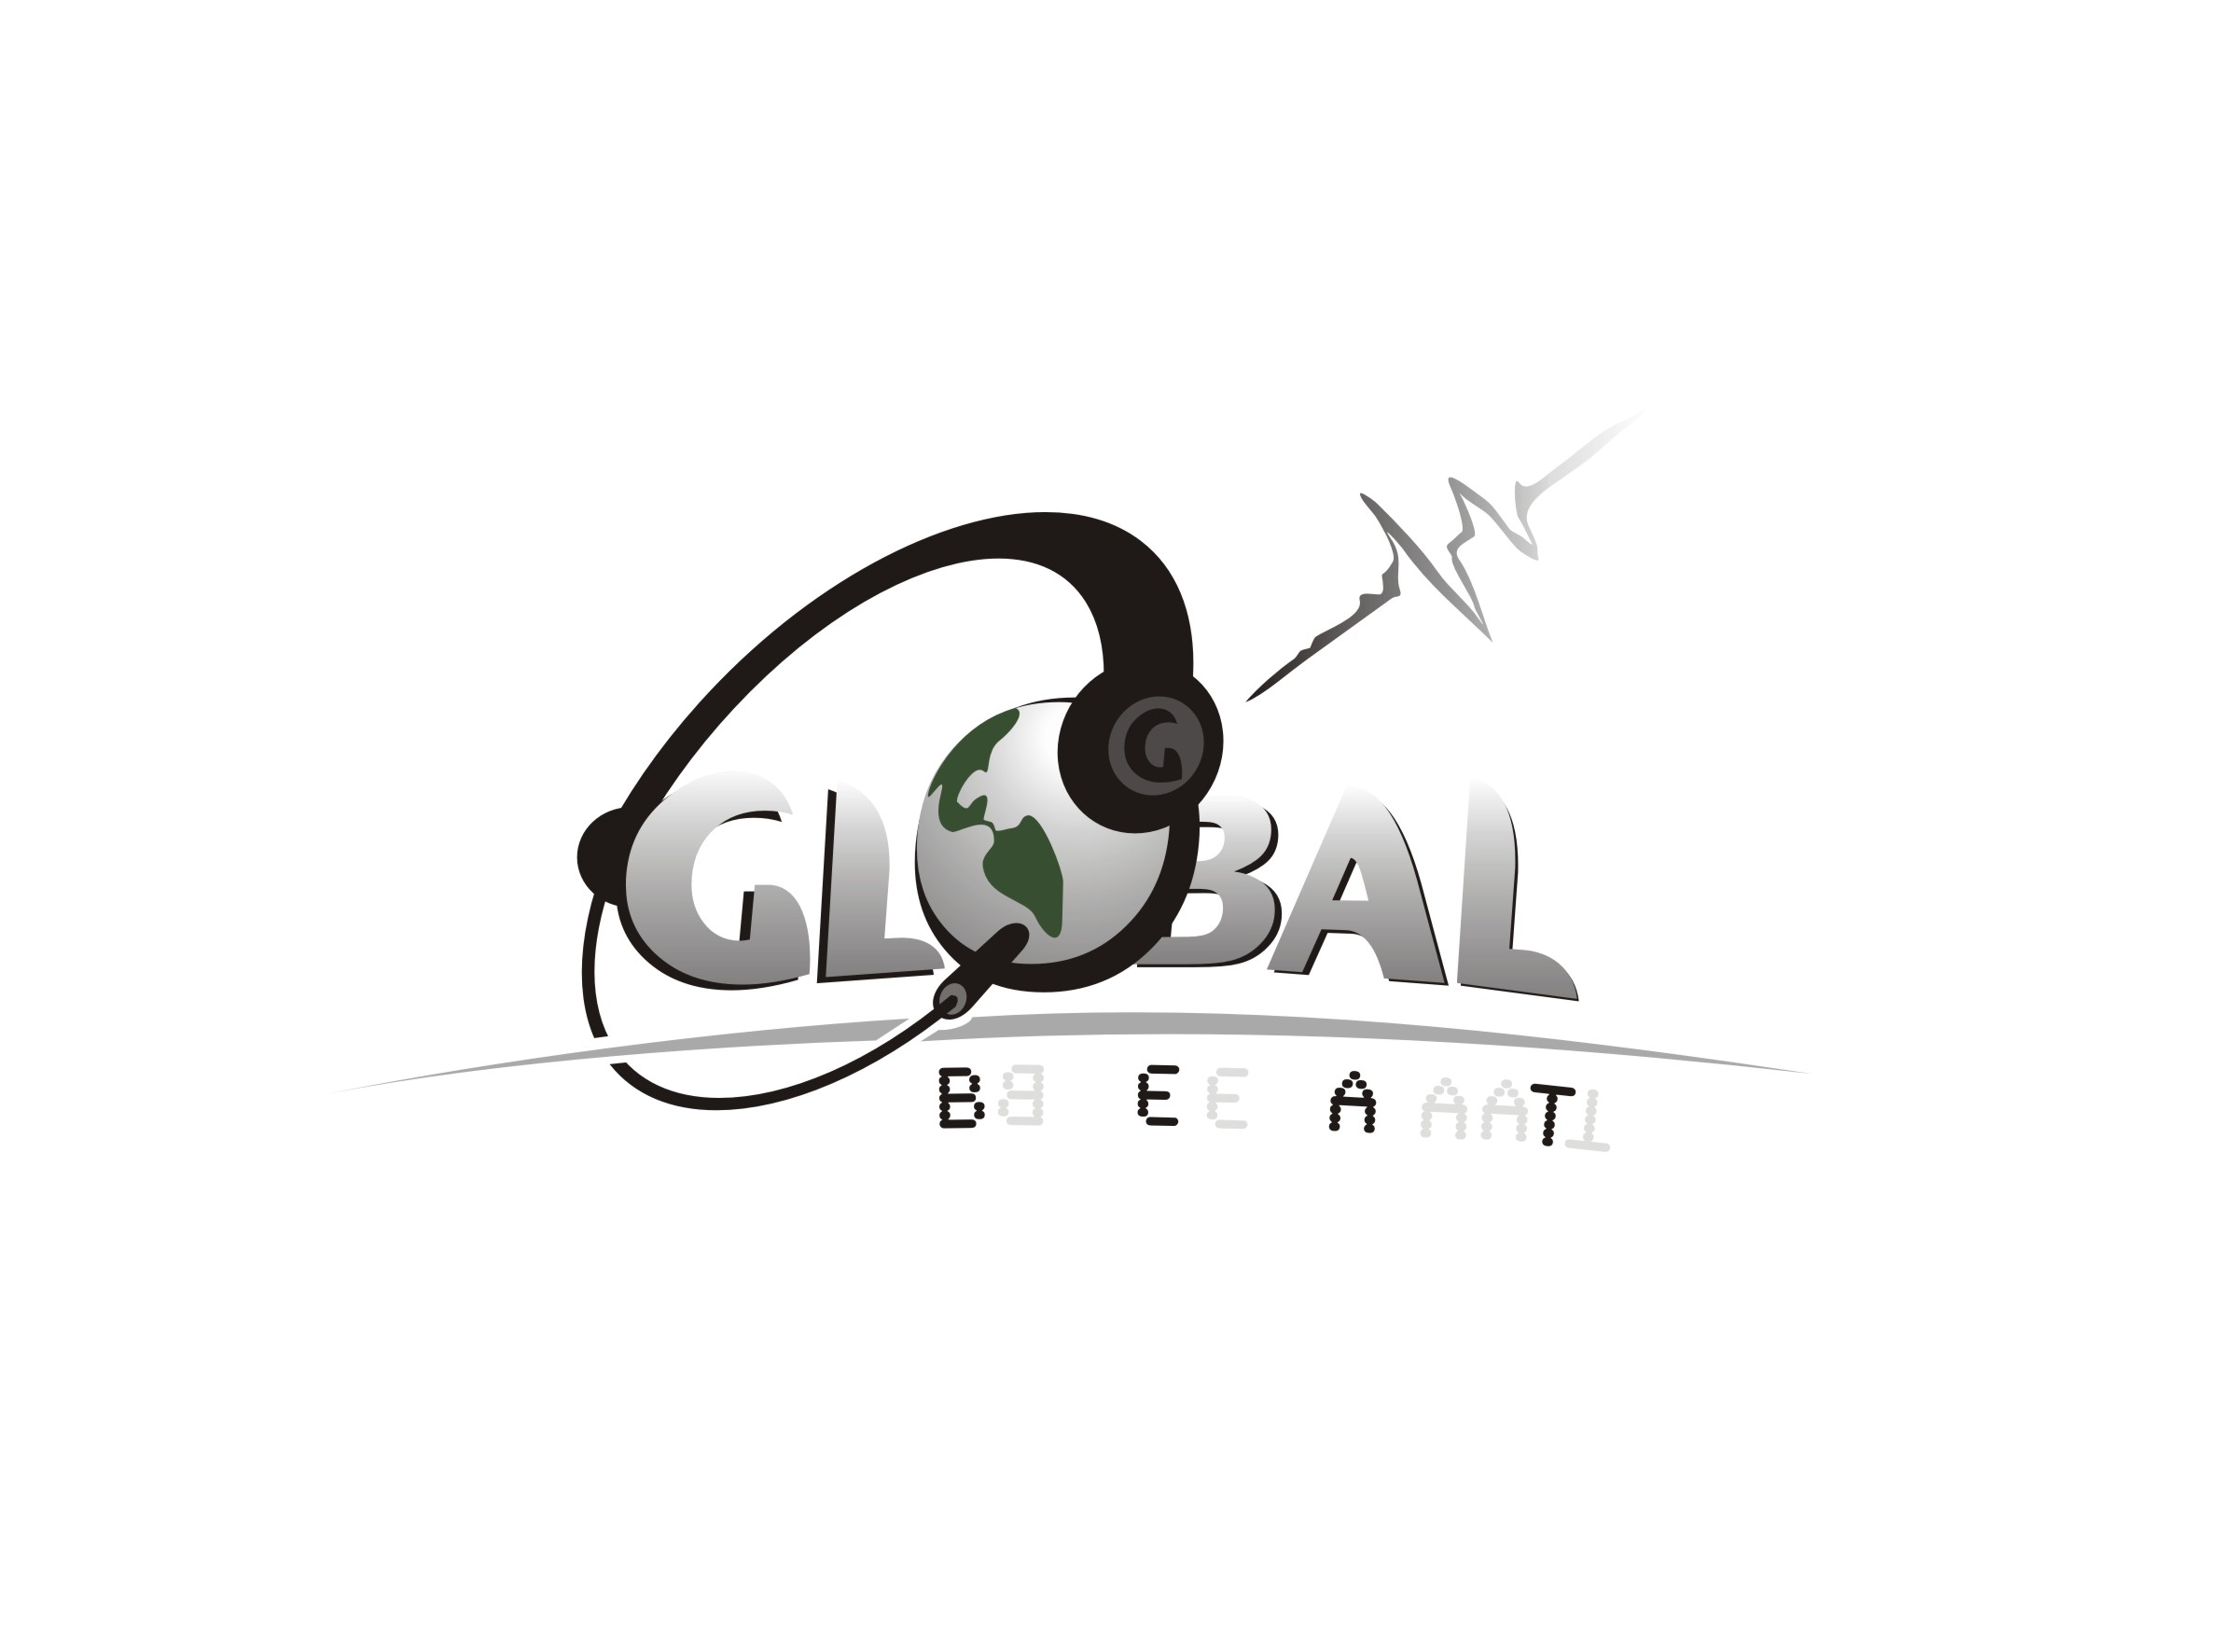 Global Beat un viaje musical a diferentes latitudes